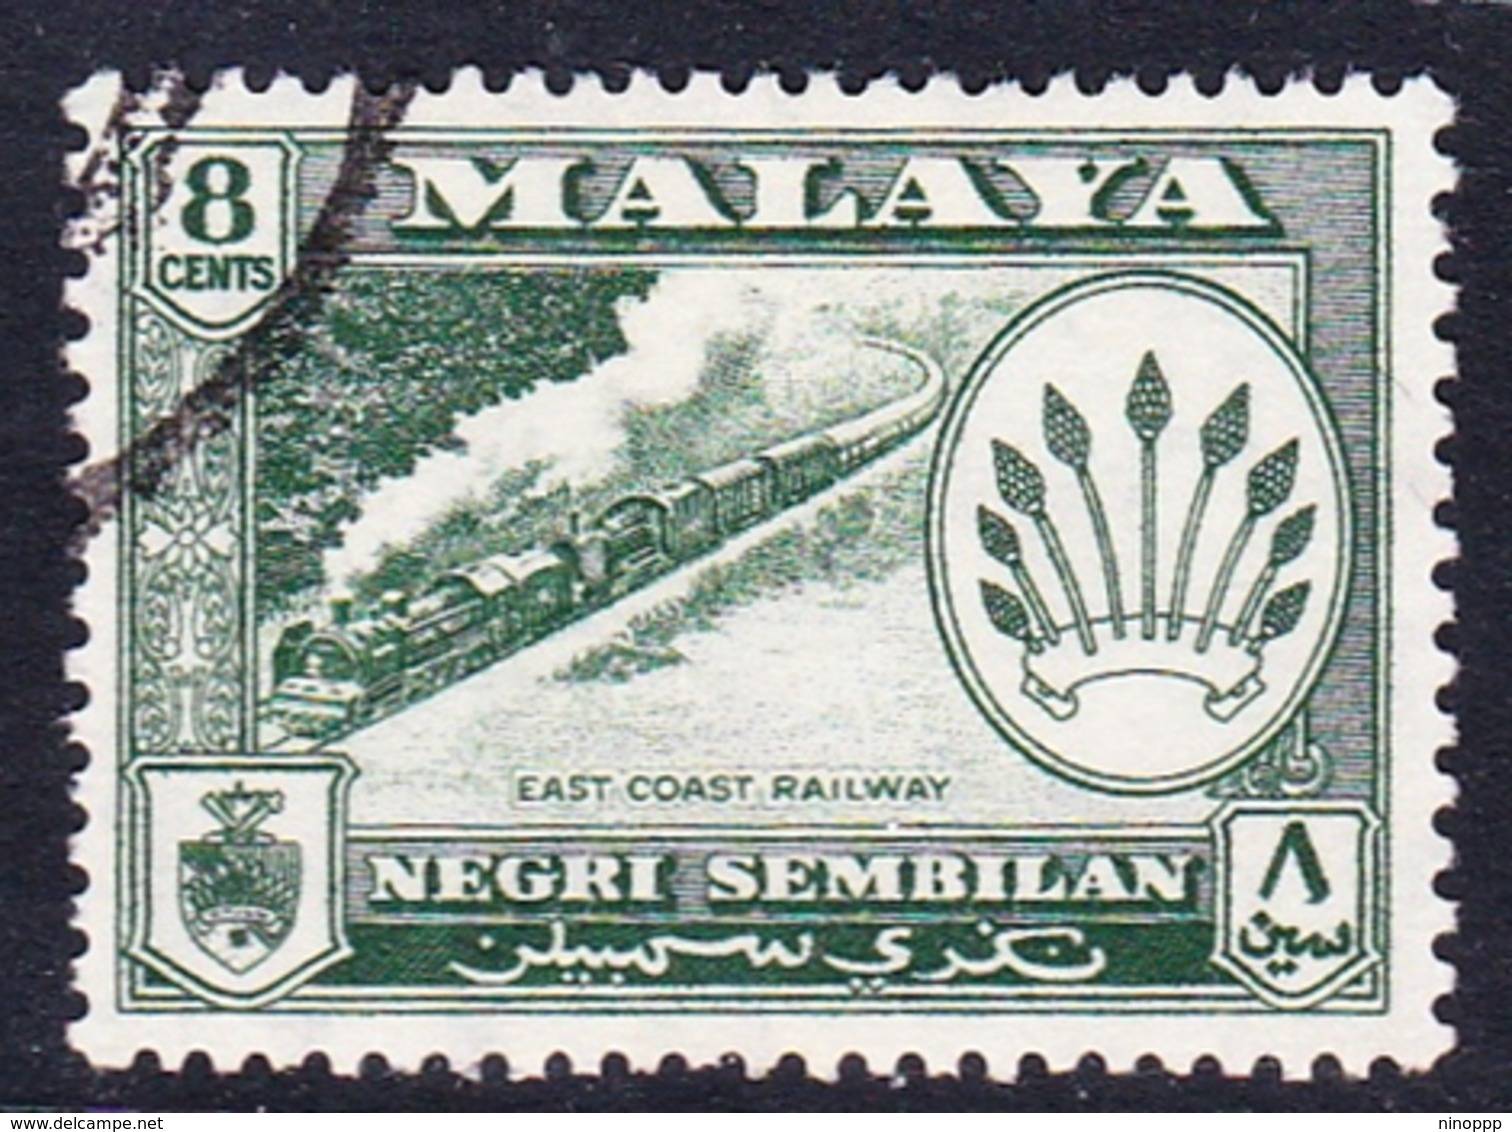 Malaysia-Negri Sembilan SG 72 1957 Definitives, 8c Myrtle-green, Used - Negri Sembilan